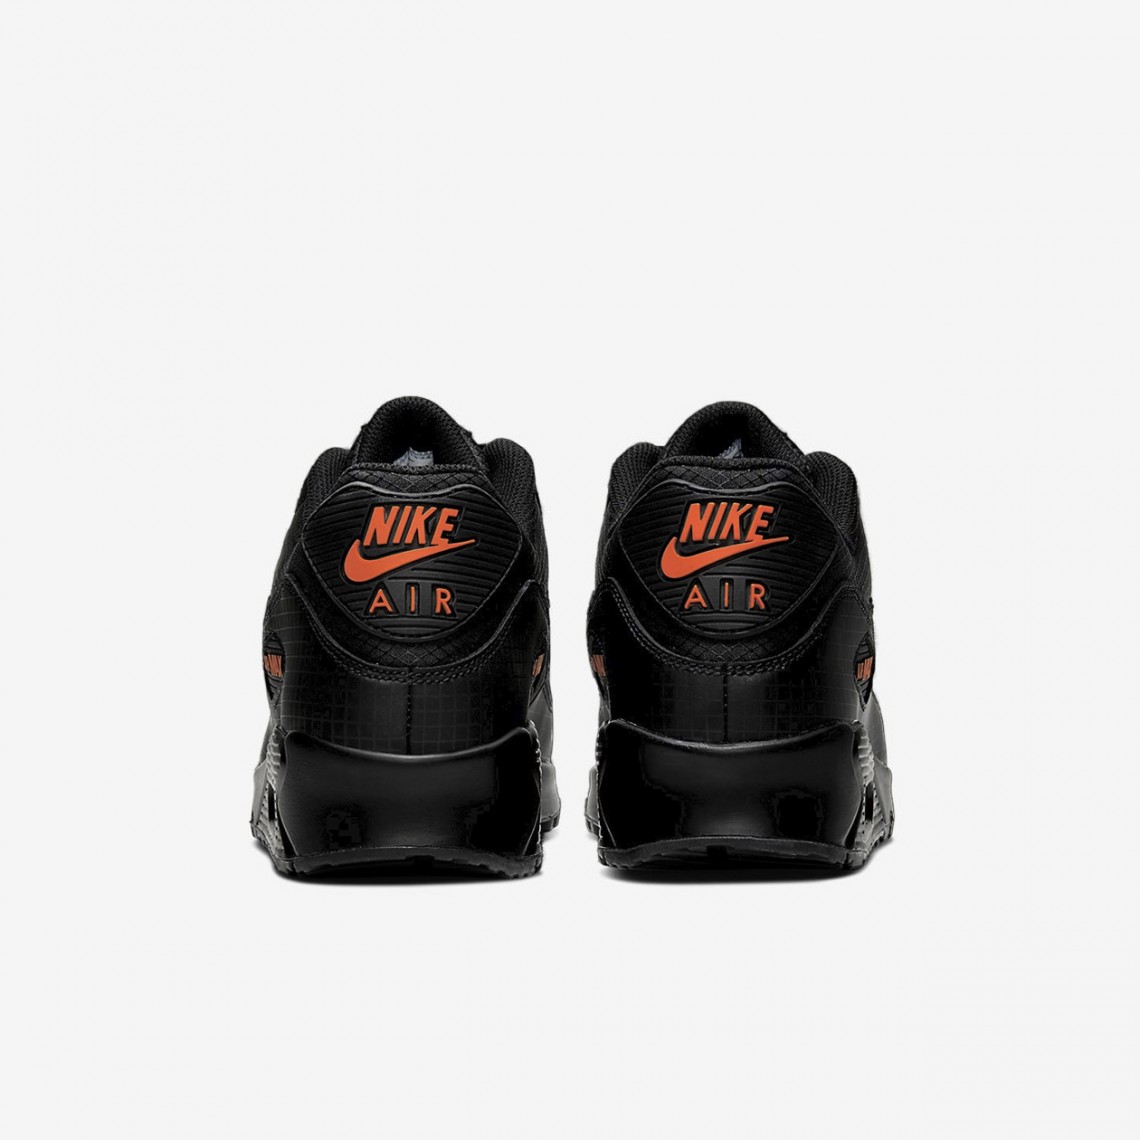 Nike Air Max 90 svart orange 2019 Halloween Edition herr- och damskor CT2533-001